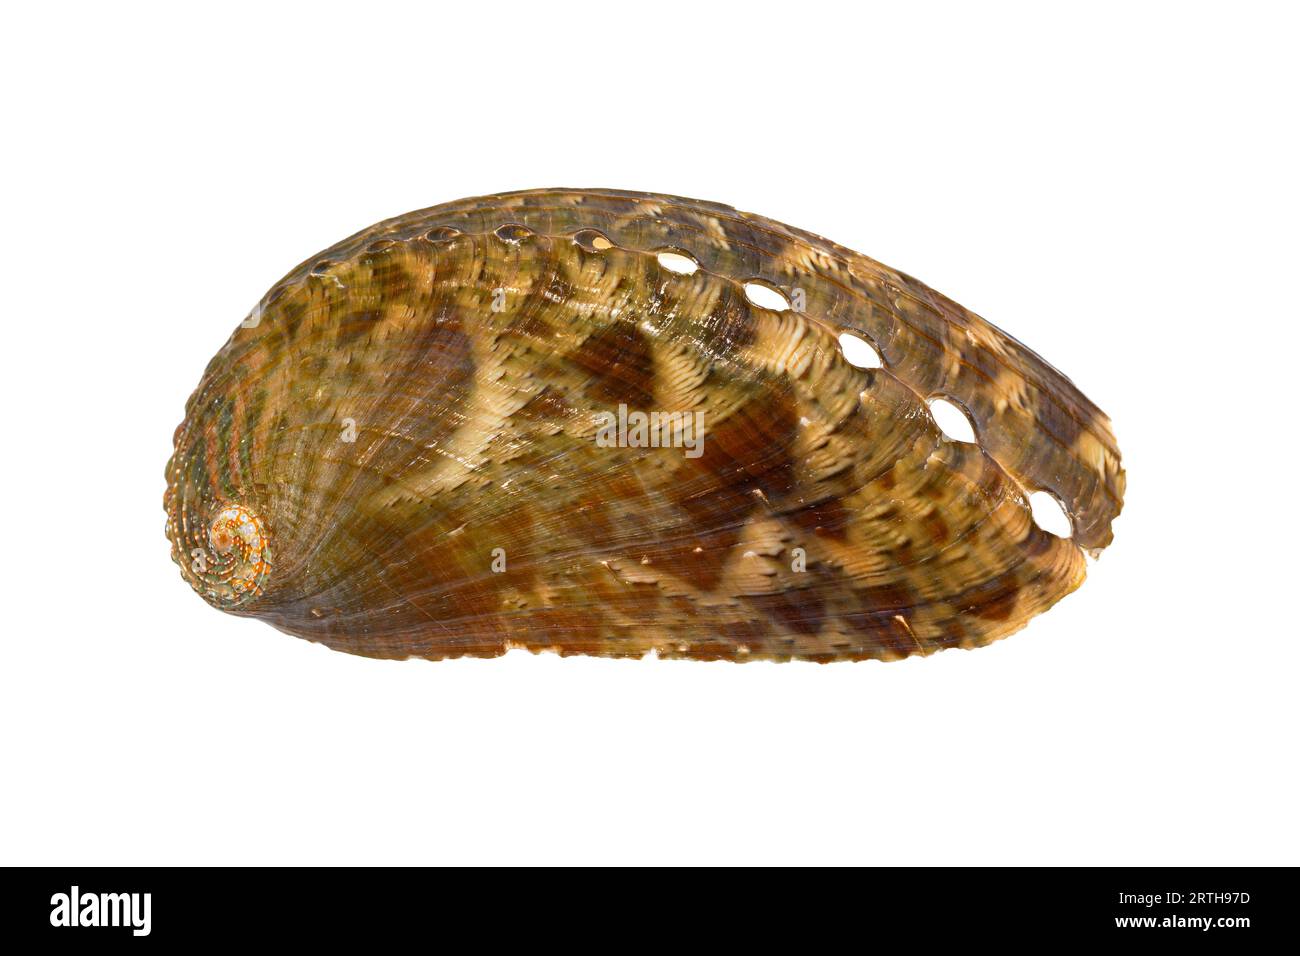 Haliotis asinina, mollusque gastéropode tropical de la mer Indo-Pacifique (subtidale, eau peu profonde) (Ass/Donkey's Ear Abalone) Banque D'Images